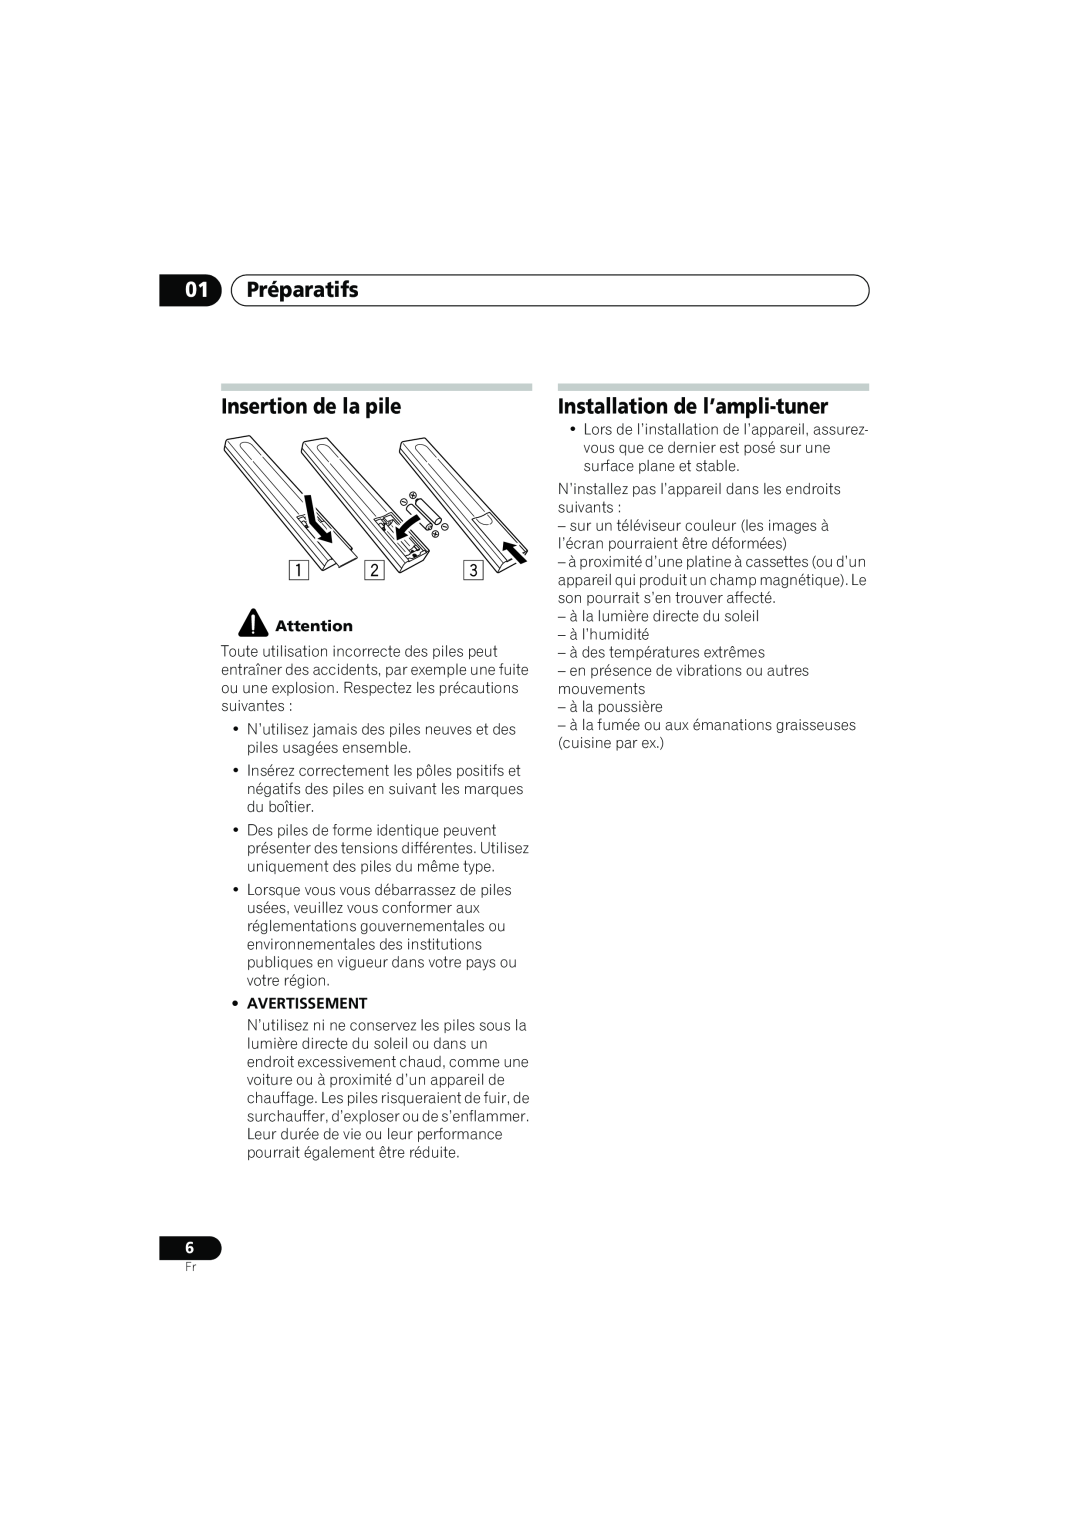 Pioneer SX-A6MK2-K operating instructions 01Préparatifs Insertion de la pile, Installation de l’ampli-tuner, Avertissement 